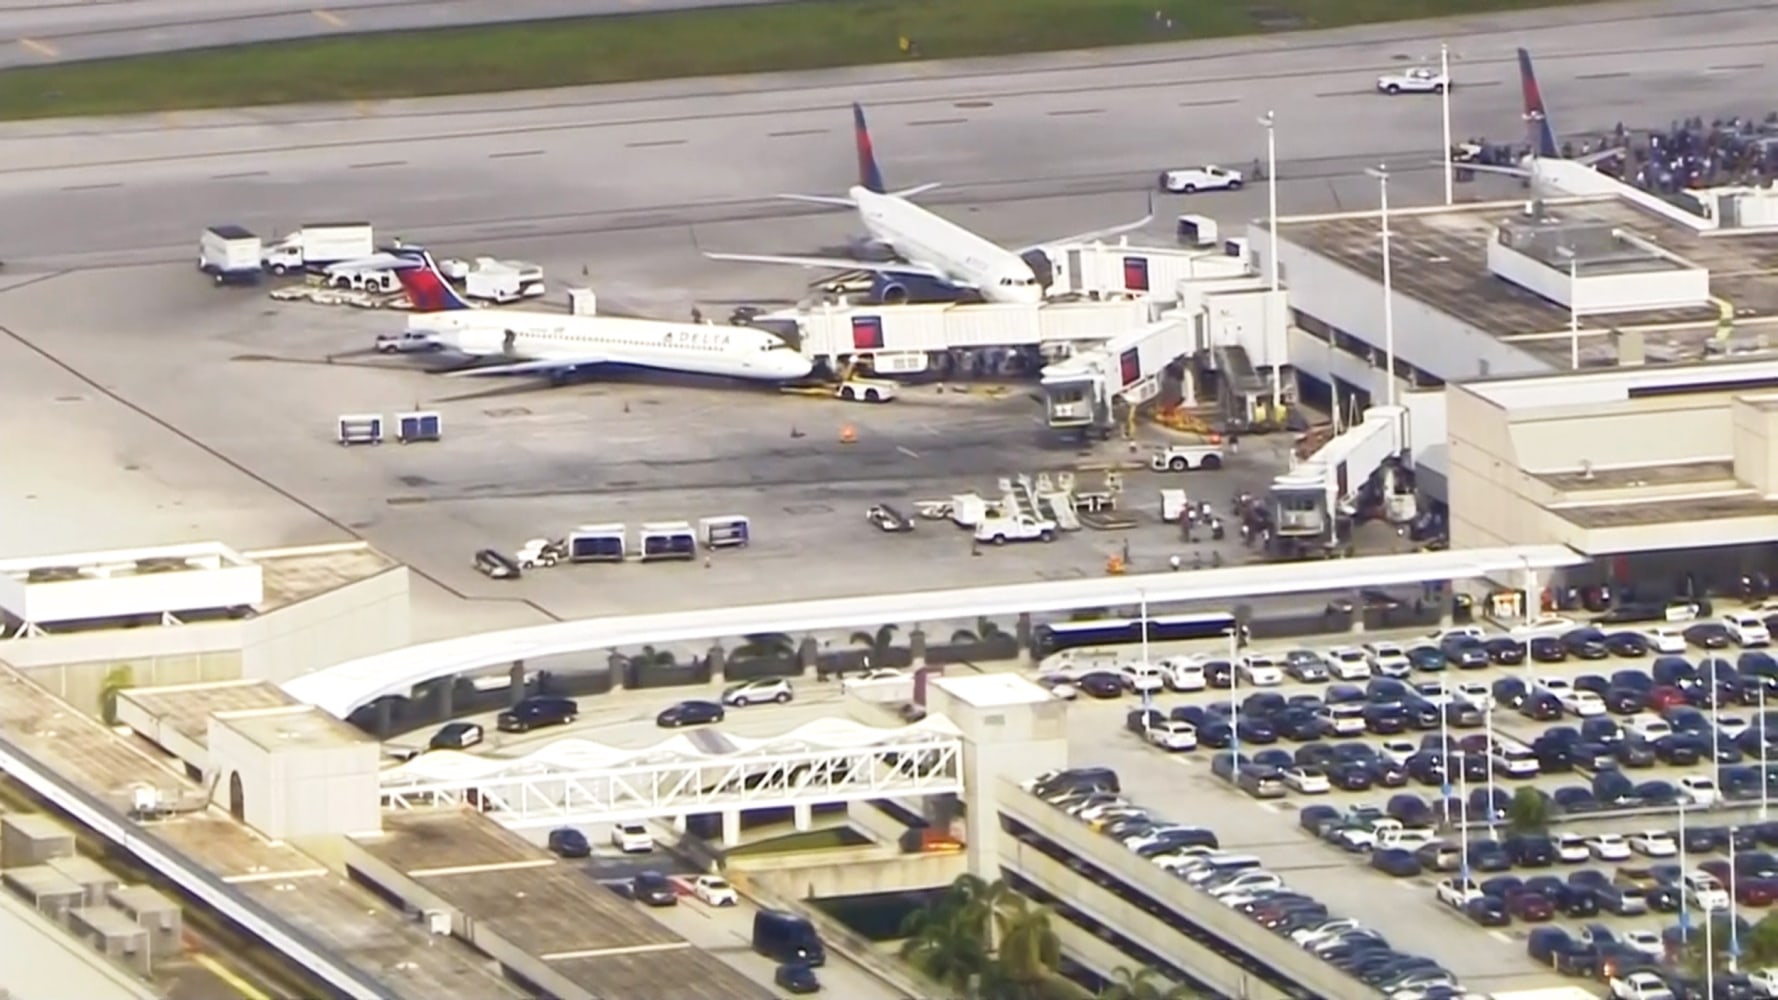 Fort Lauderdale Shooting: Gunman Opens Fire at Airport, Killing